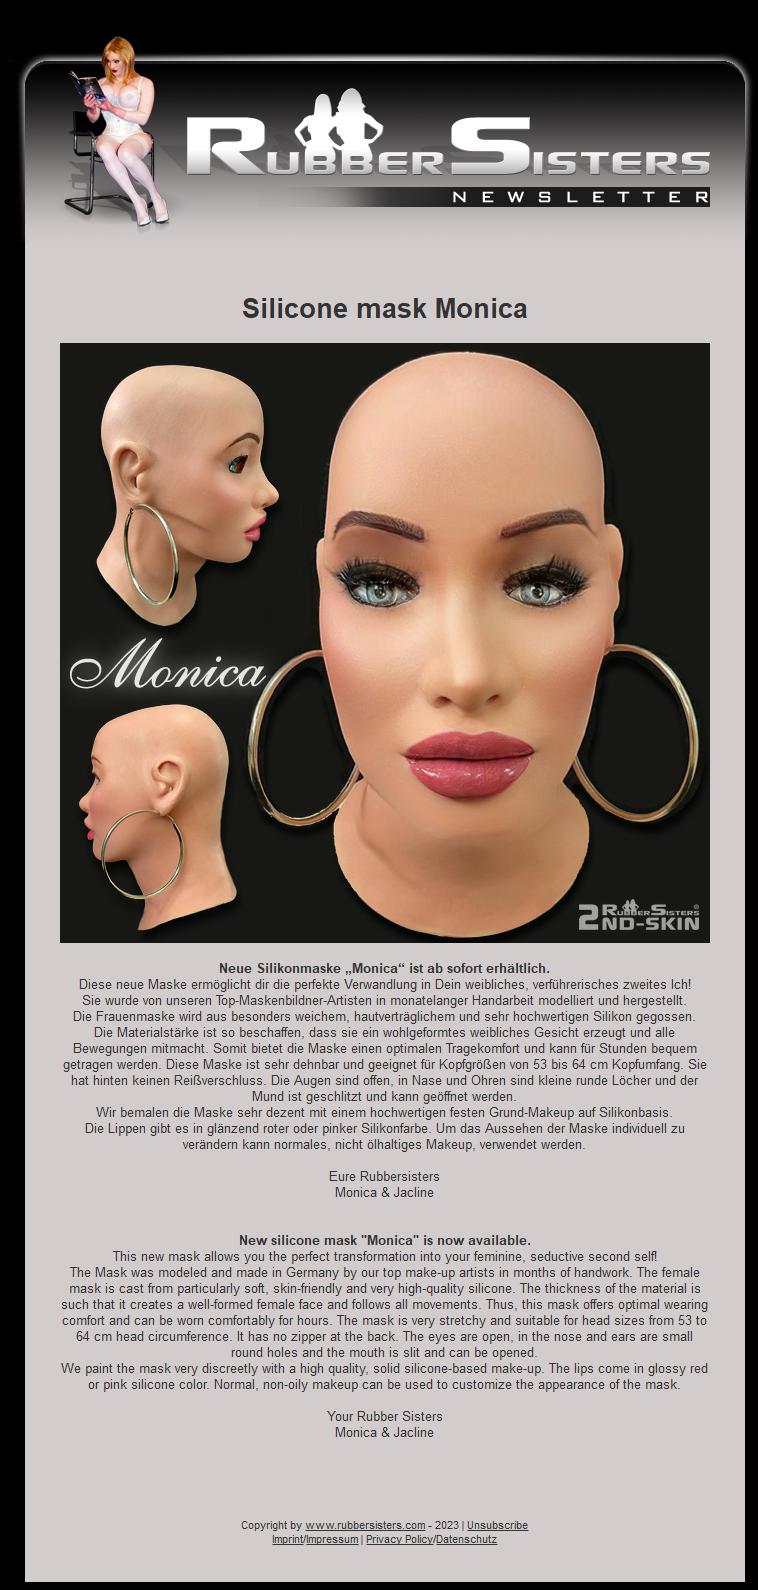 2nd-skin - News 02/2023 - Monica Mask